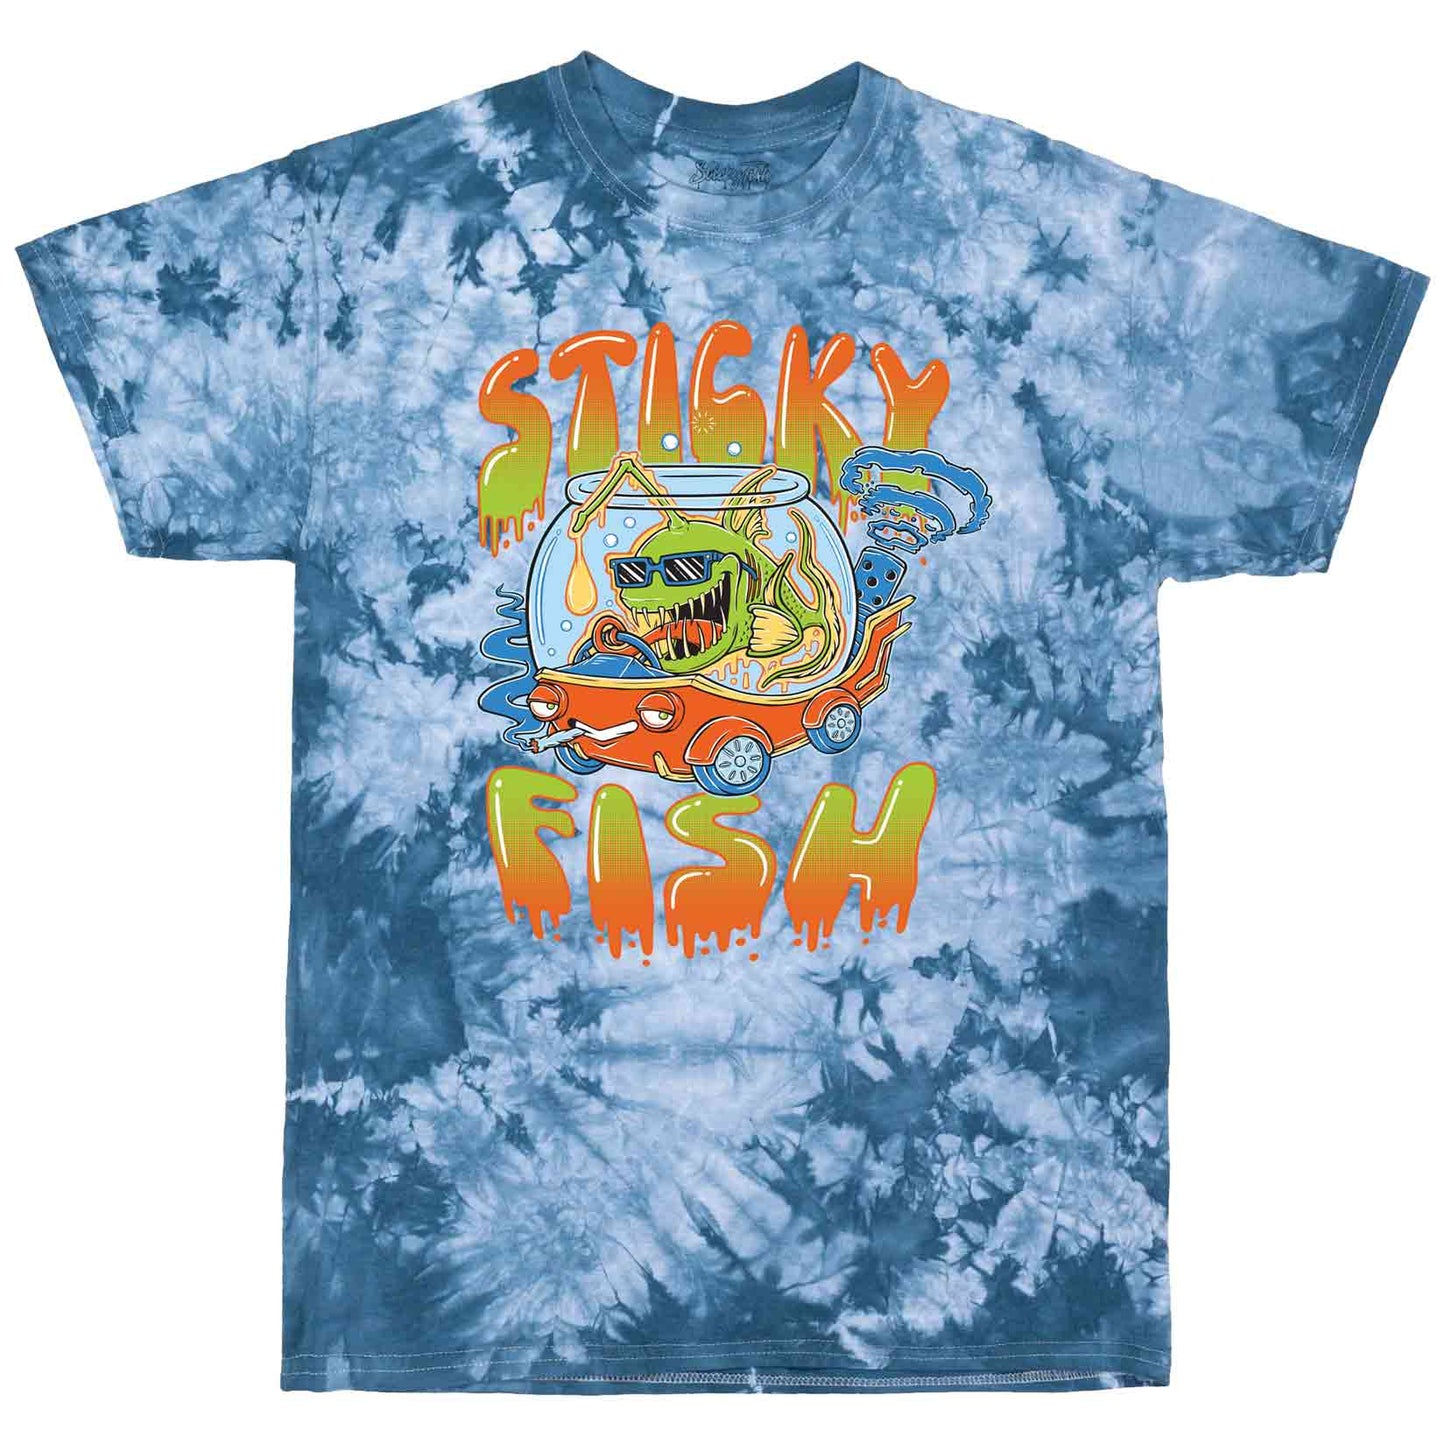 Sticky Fish - Fish Bowl - T-Shirt (Tie Dye)